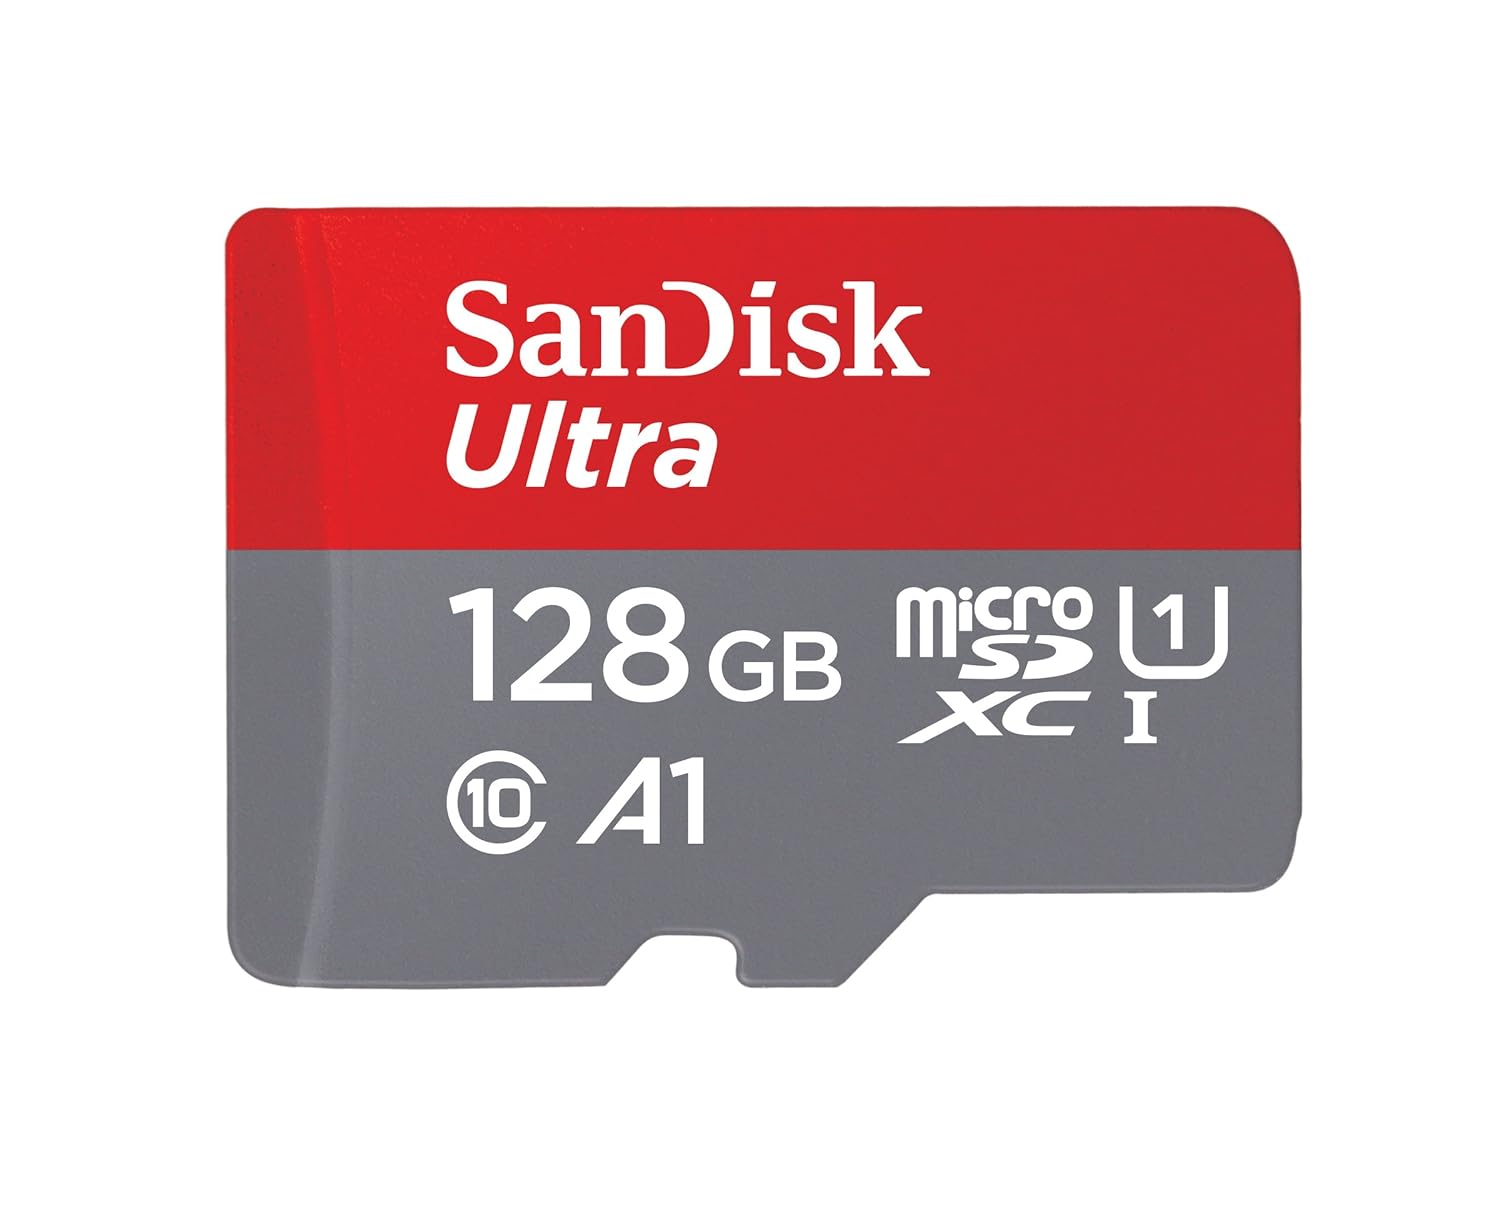 Sandisk A1 Mirco SDHC Class 10 (140 MBPS)  128 GB